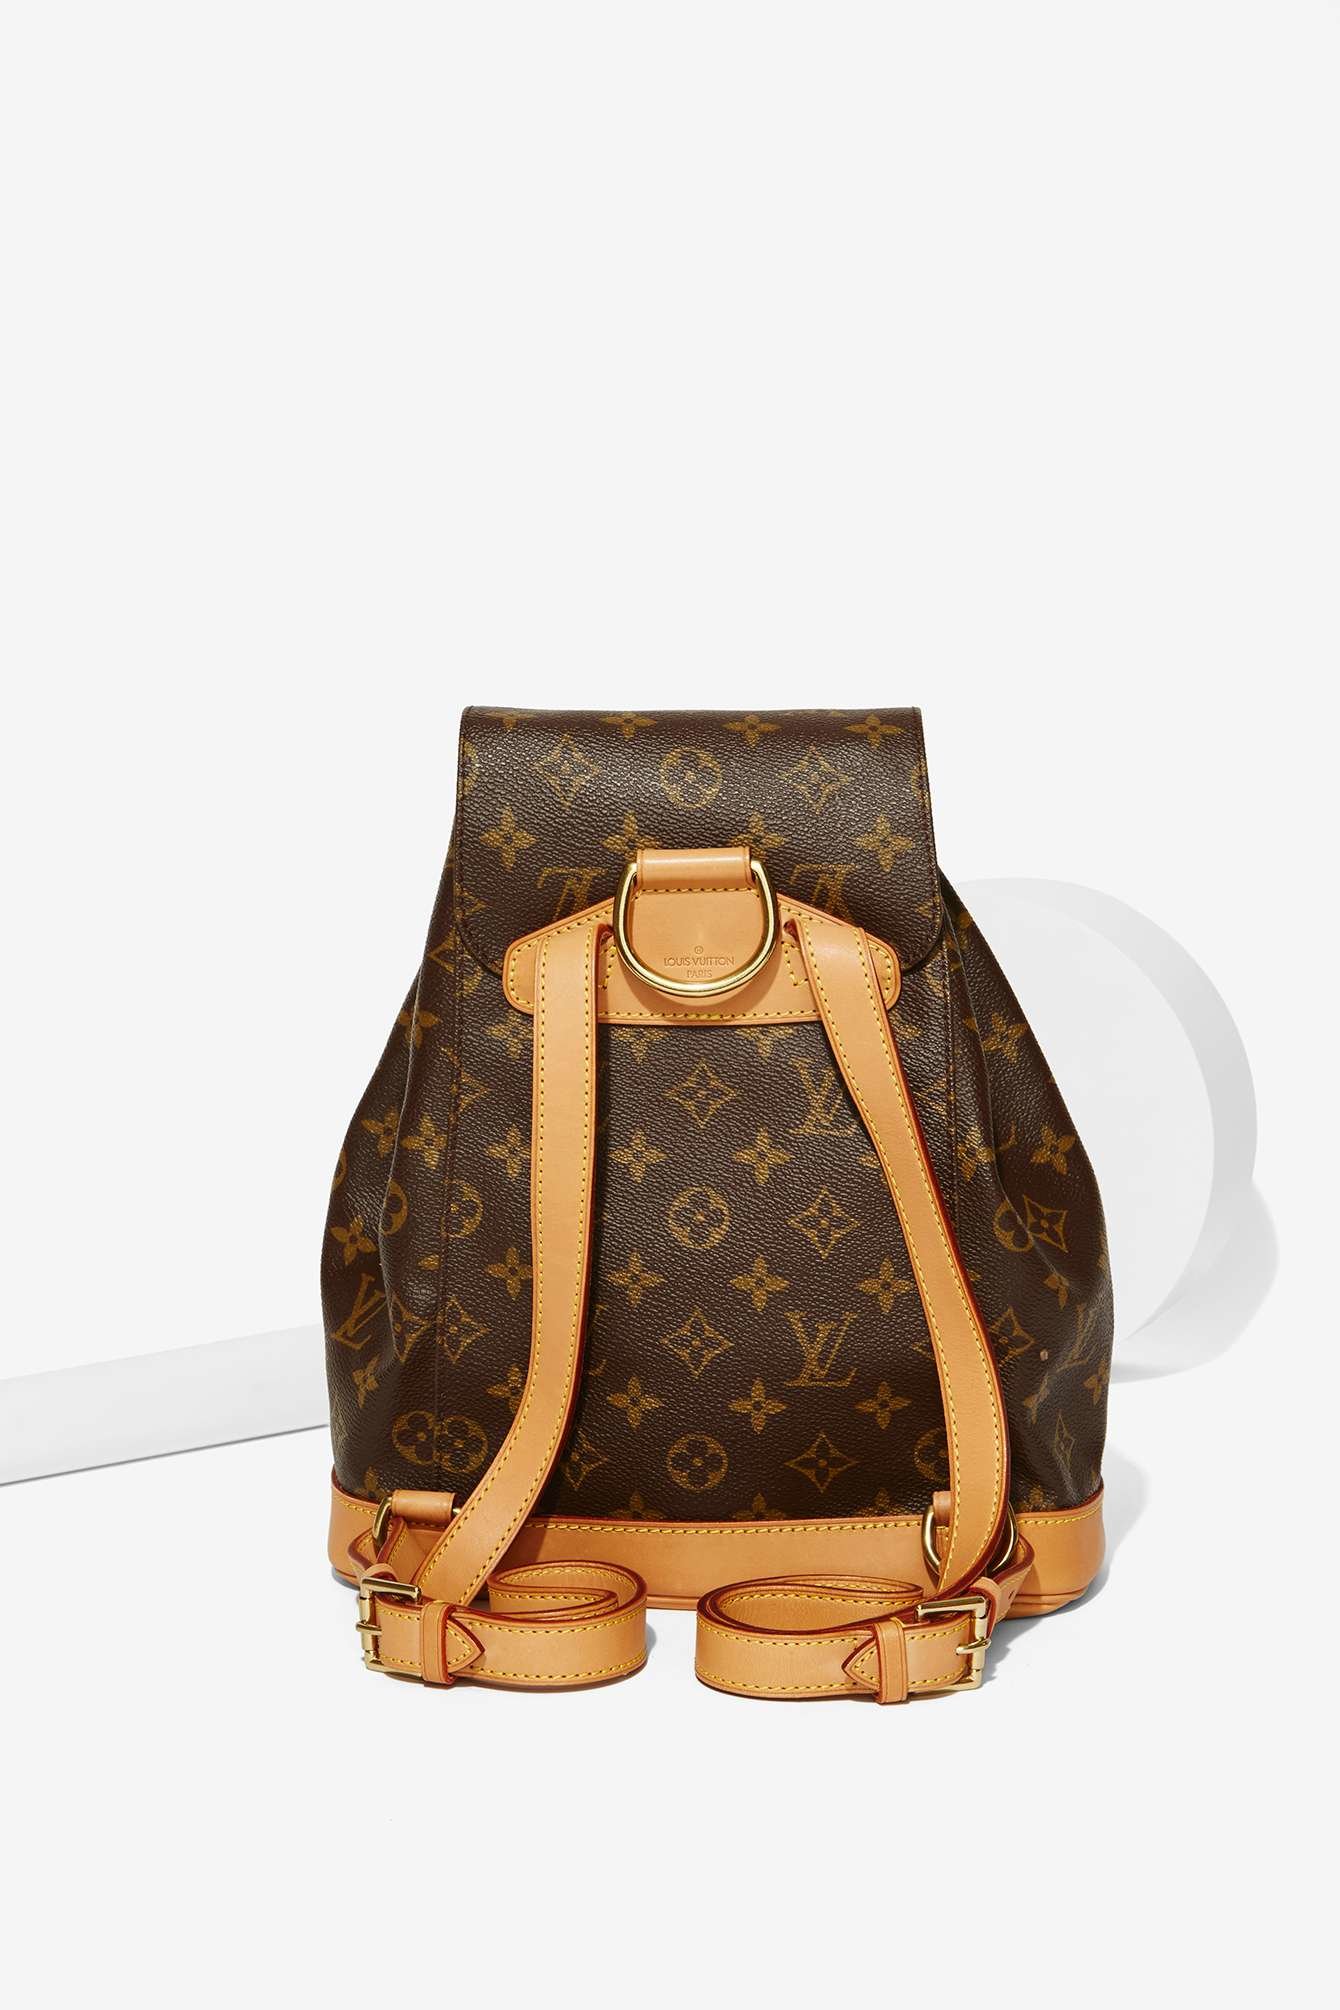 Lyst - Louis Vuitton Vintage Monogram Montsouris Mm Backpack in Brown